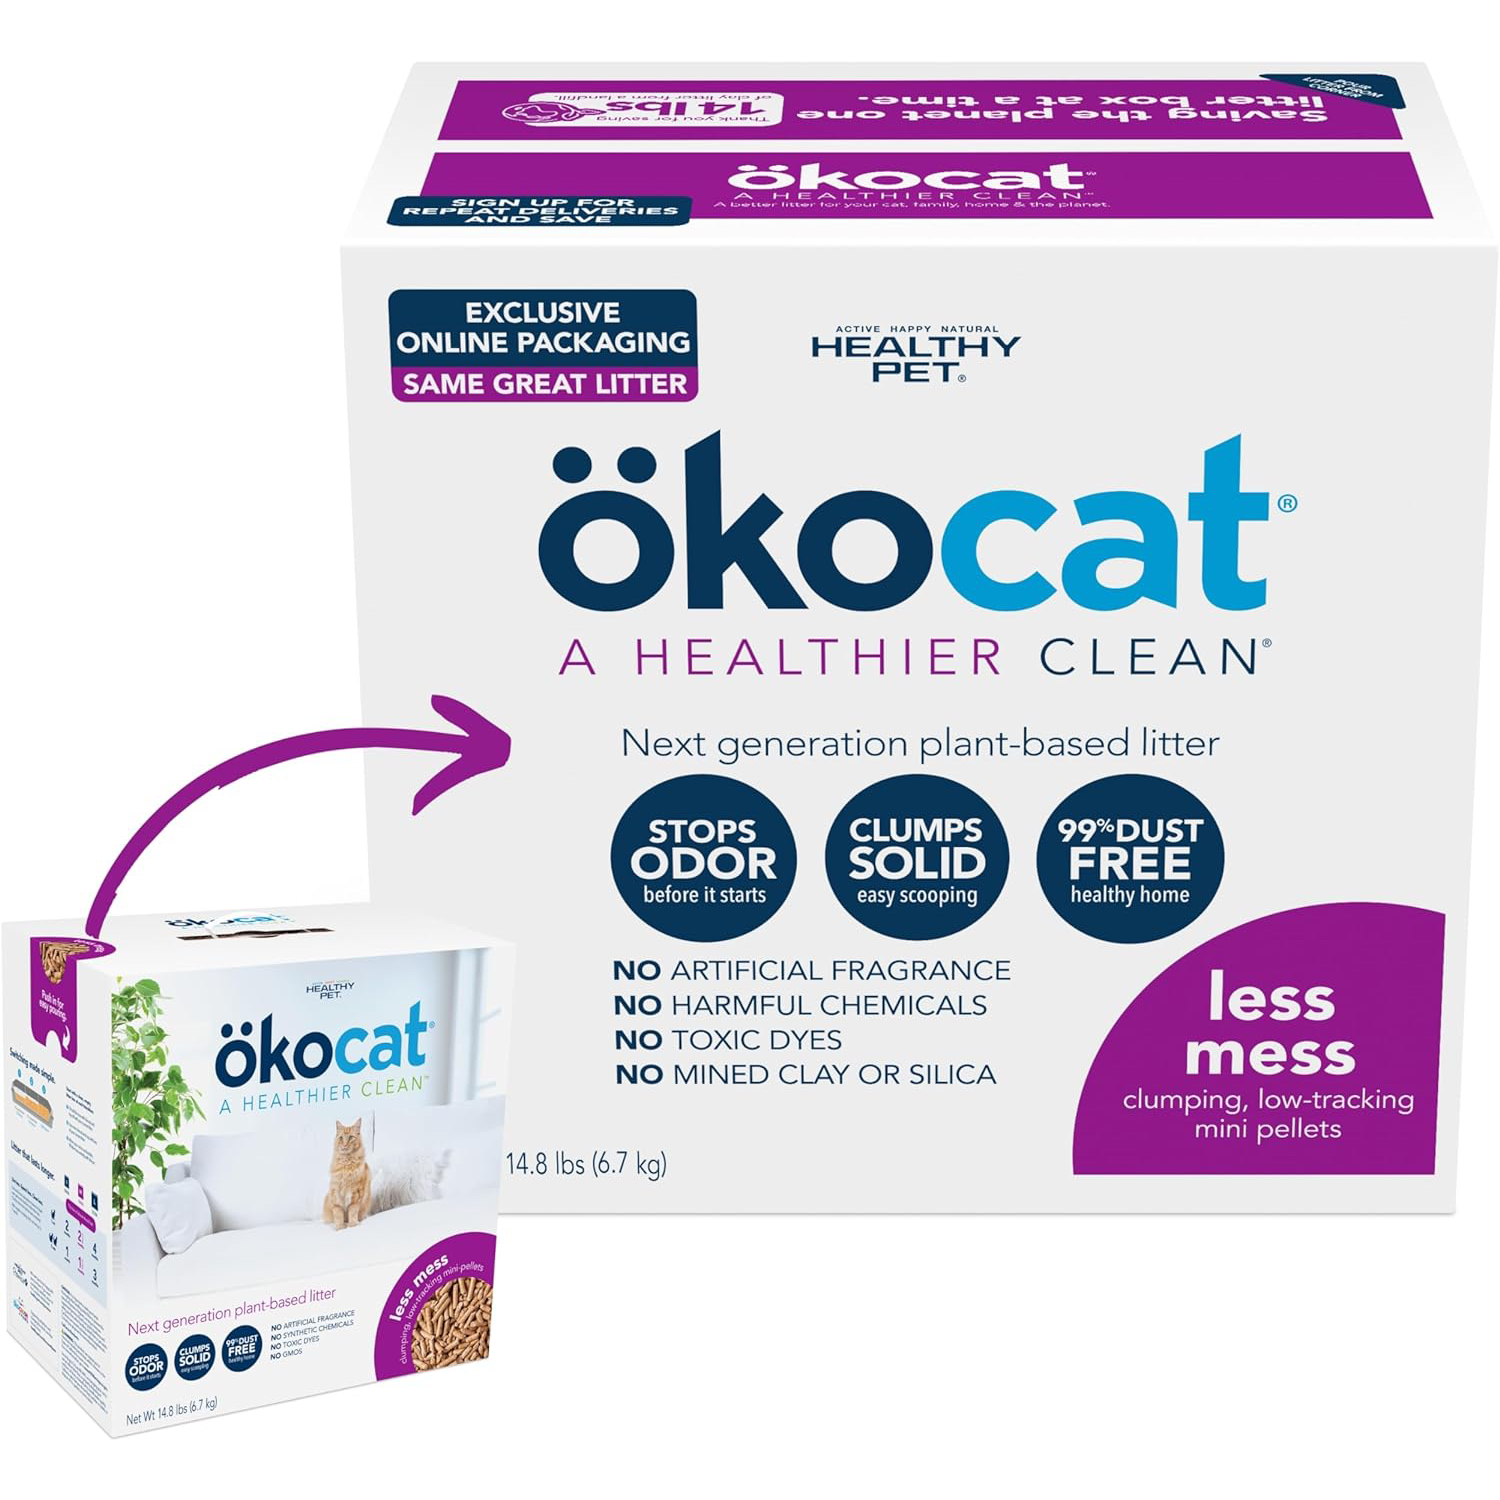 ökocat Less Mess Natural Wood Clumping Cat Litter Mini-Pellets, Great for Long-Hair Breeds, Medium, 14.8 lbs. (Packaging May Vary) new